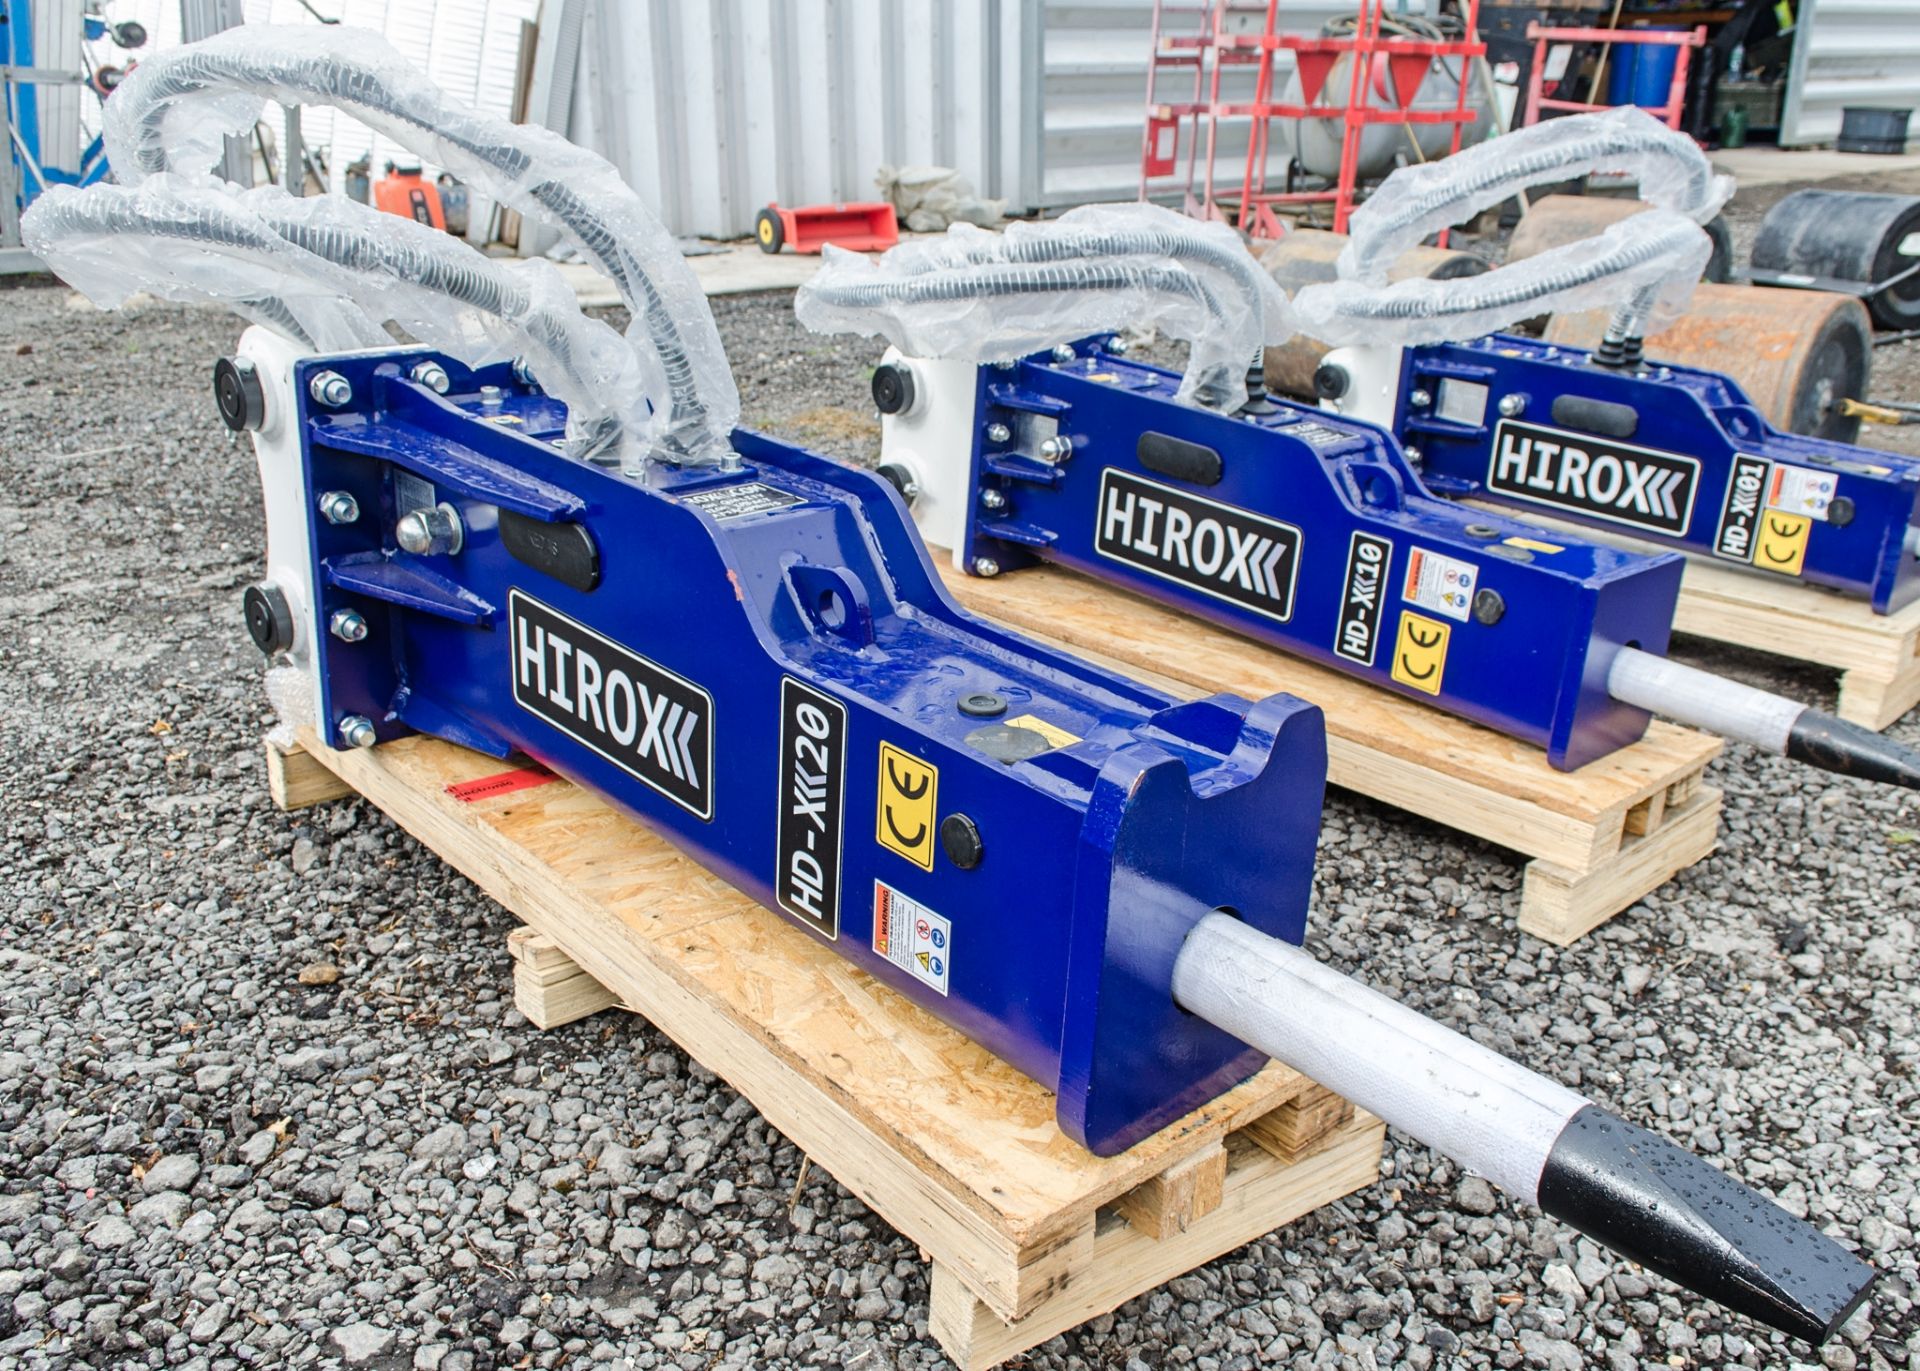 Hirox HDX-20 hydraulic breaker to suit 4 to 7 tonne excavator c/w tool kit ** New & unused **